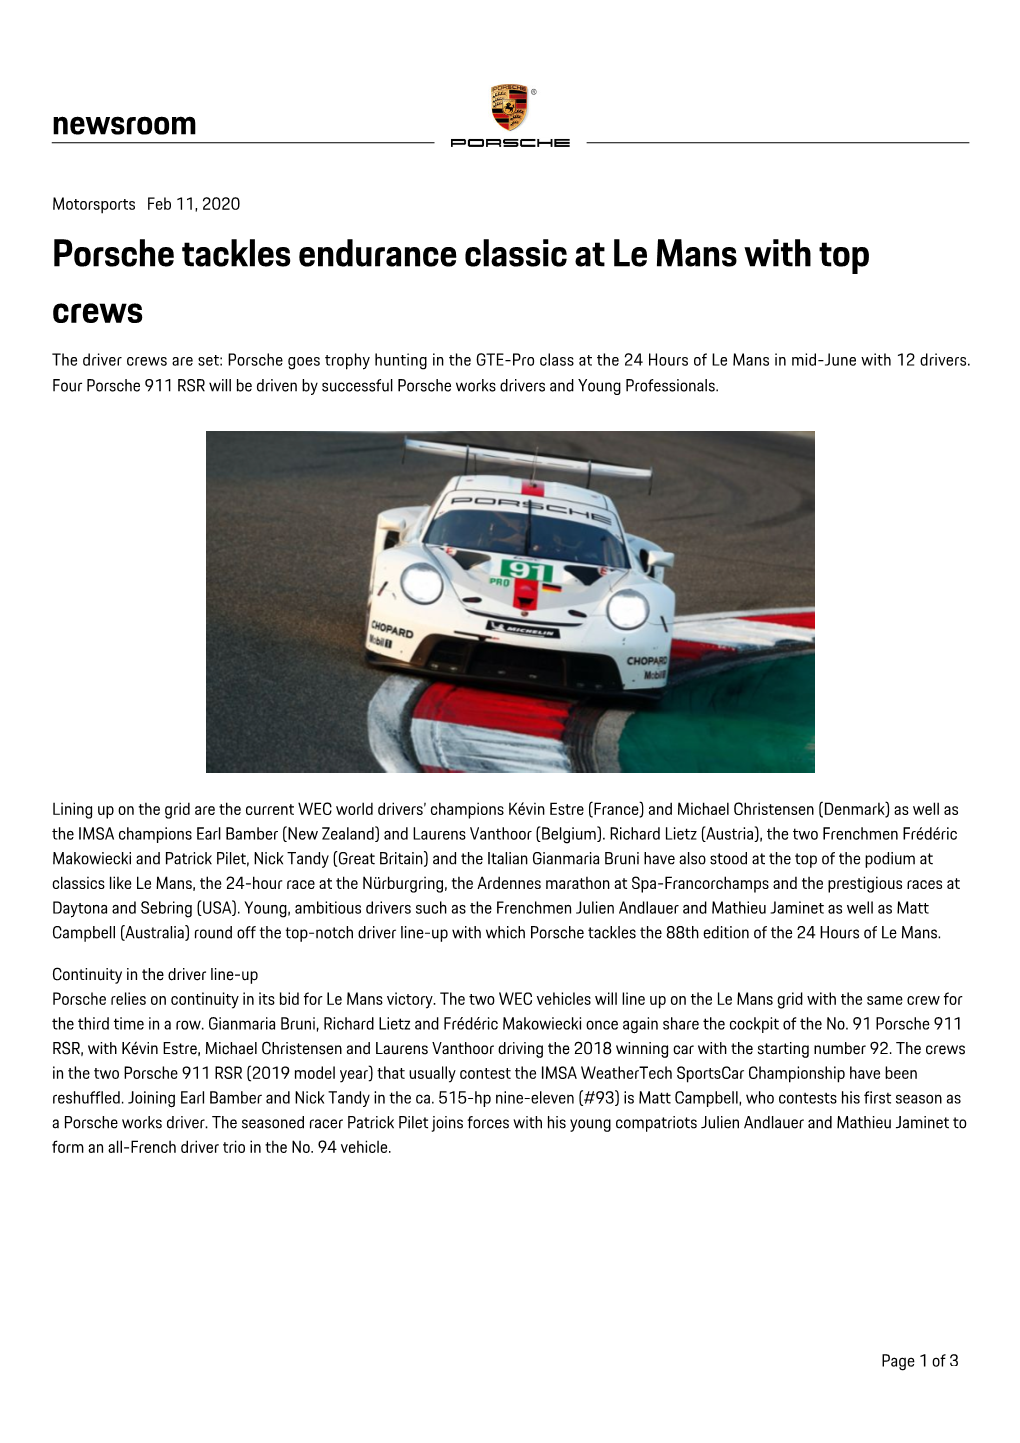 Porsche Tackles Endurance Classic at Le Mans with Top Crews